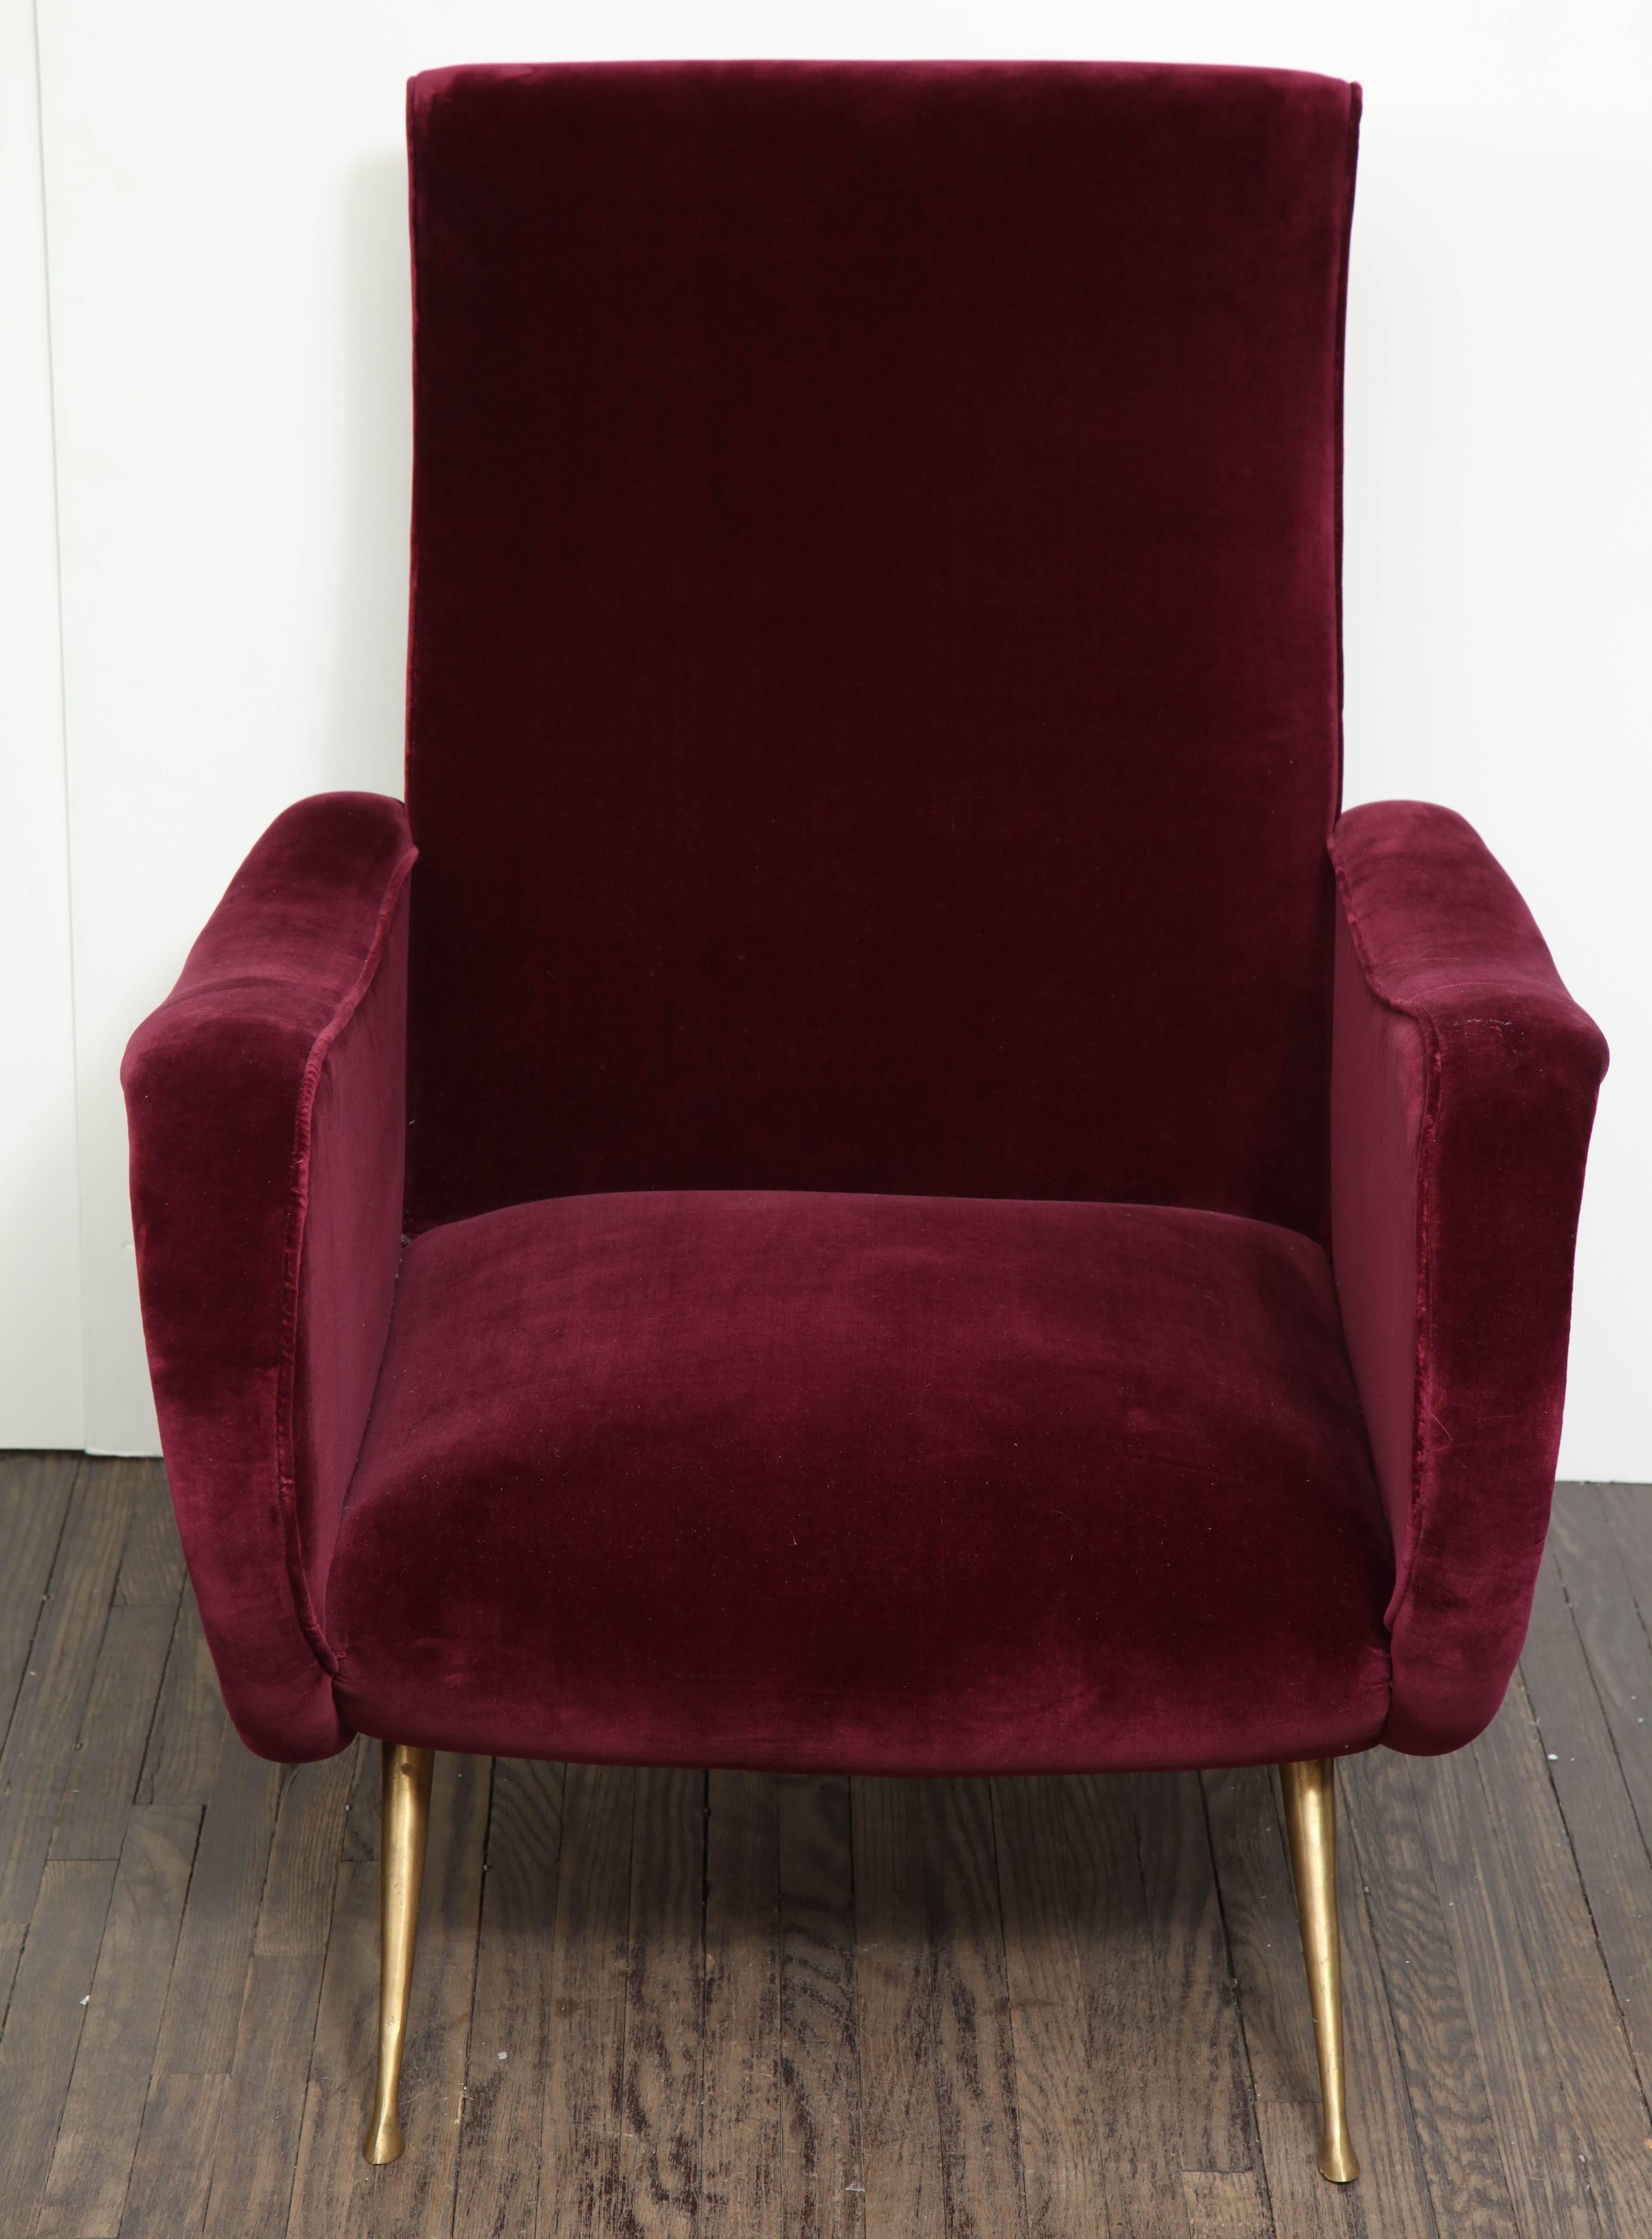 Pair of Vintage Italian Club Chairs Re-Upholstered in Burgundy Velvet 1